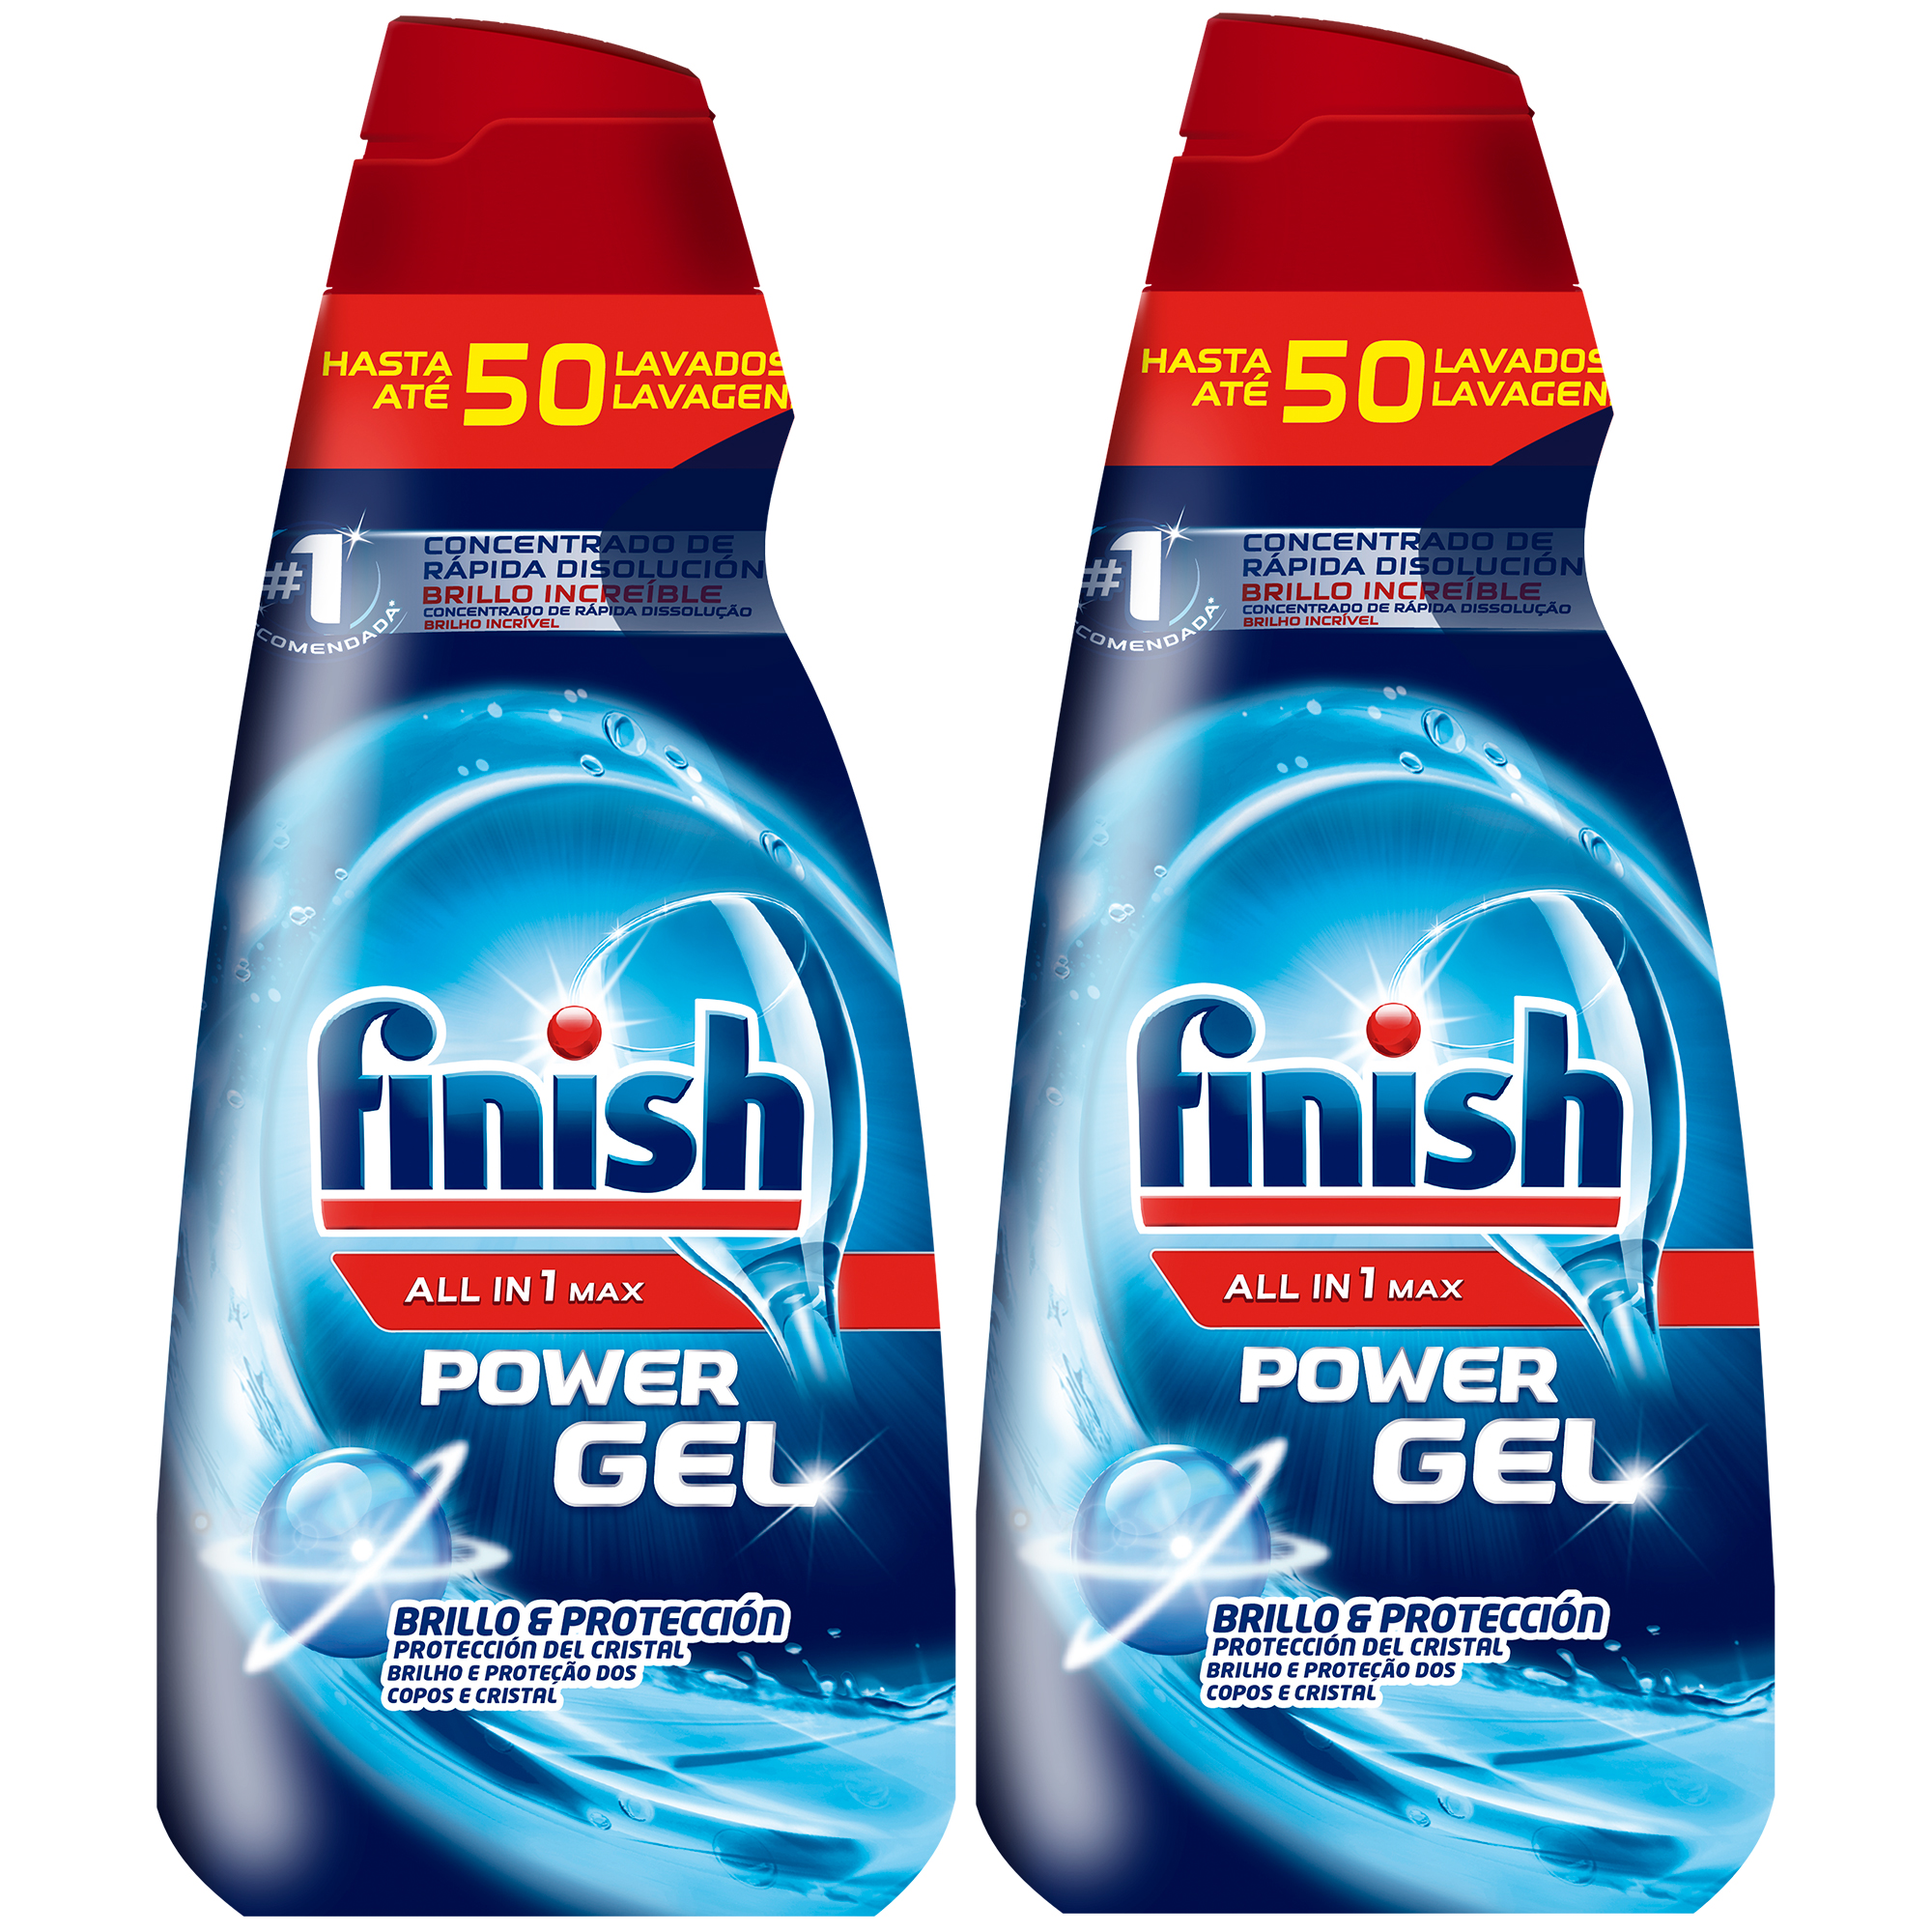 Finish - Finish All in 1 Max Power Gel Higiene Regular Lavavajillas 2x 50 lavados